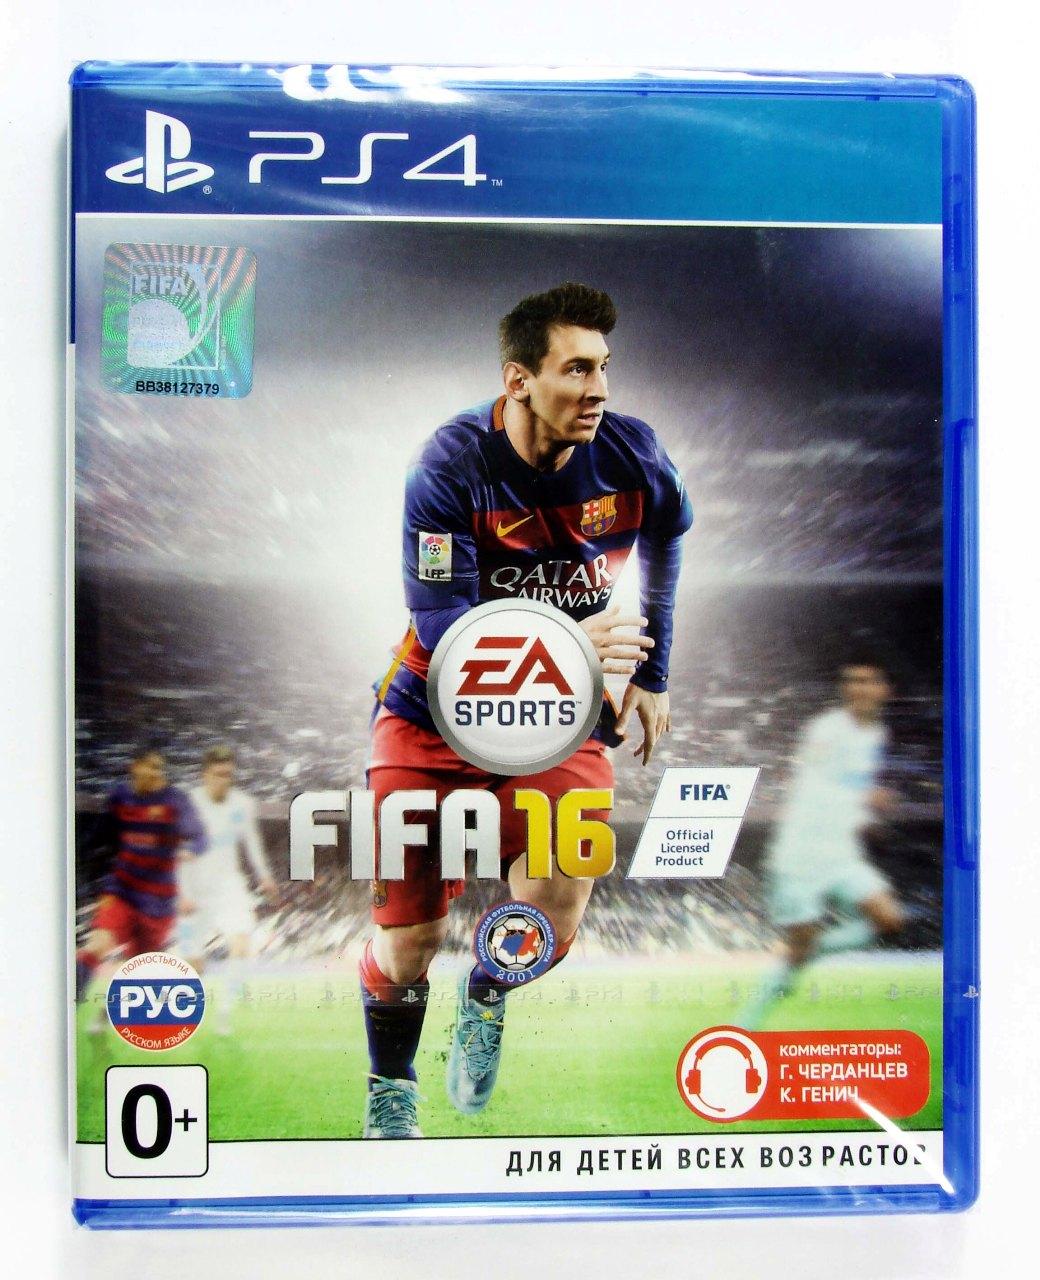   FIFA 16 [PS4,    ],  "SoftClub", BluRayDisc